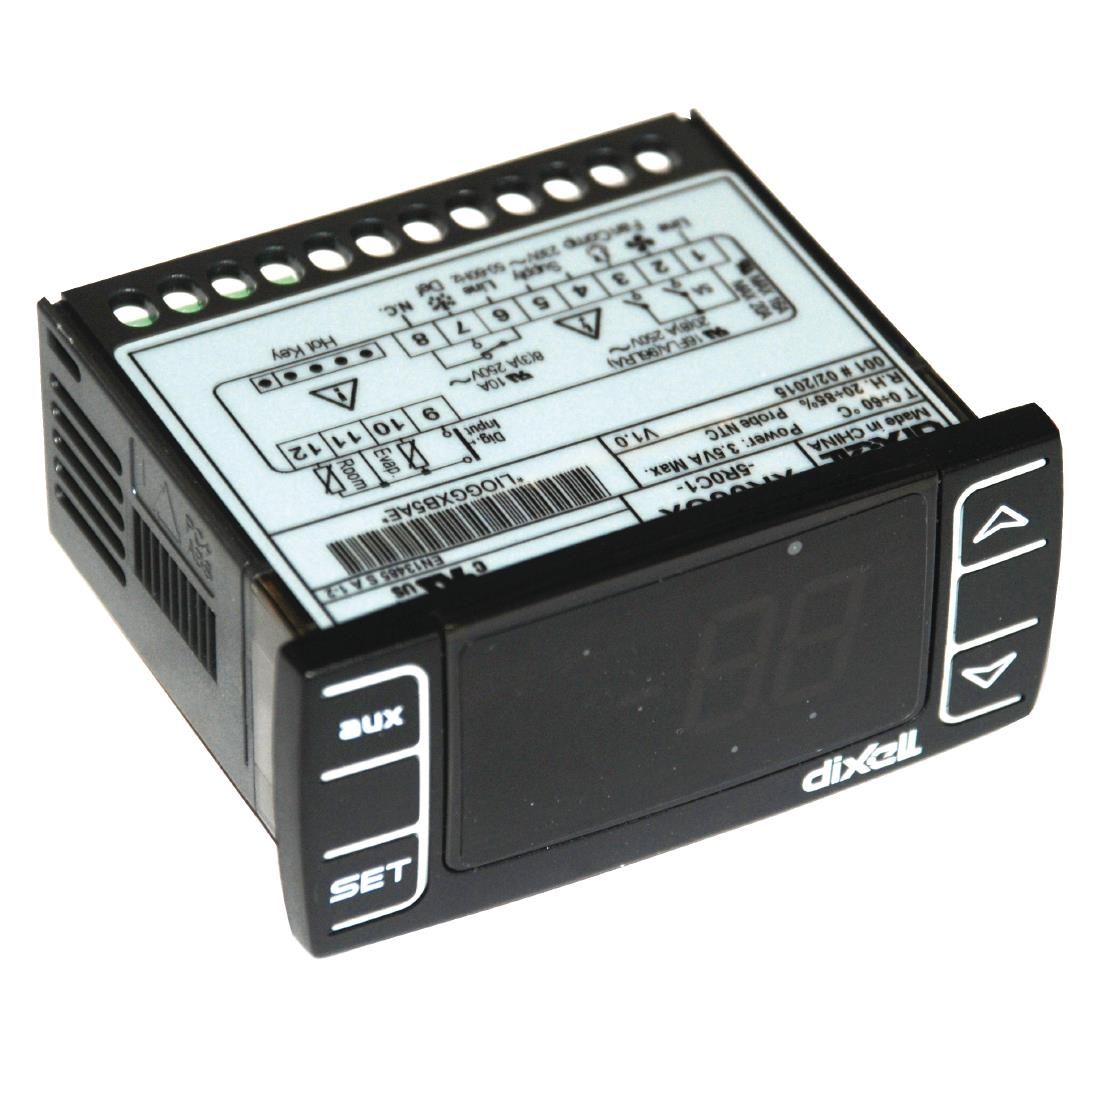 AD728 Polar Dixell Digital Controller ref XR06CX